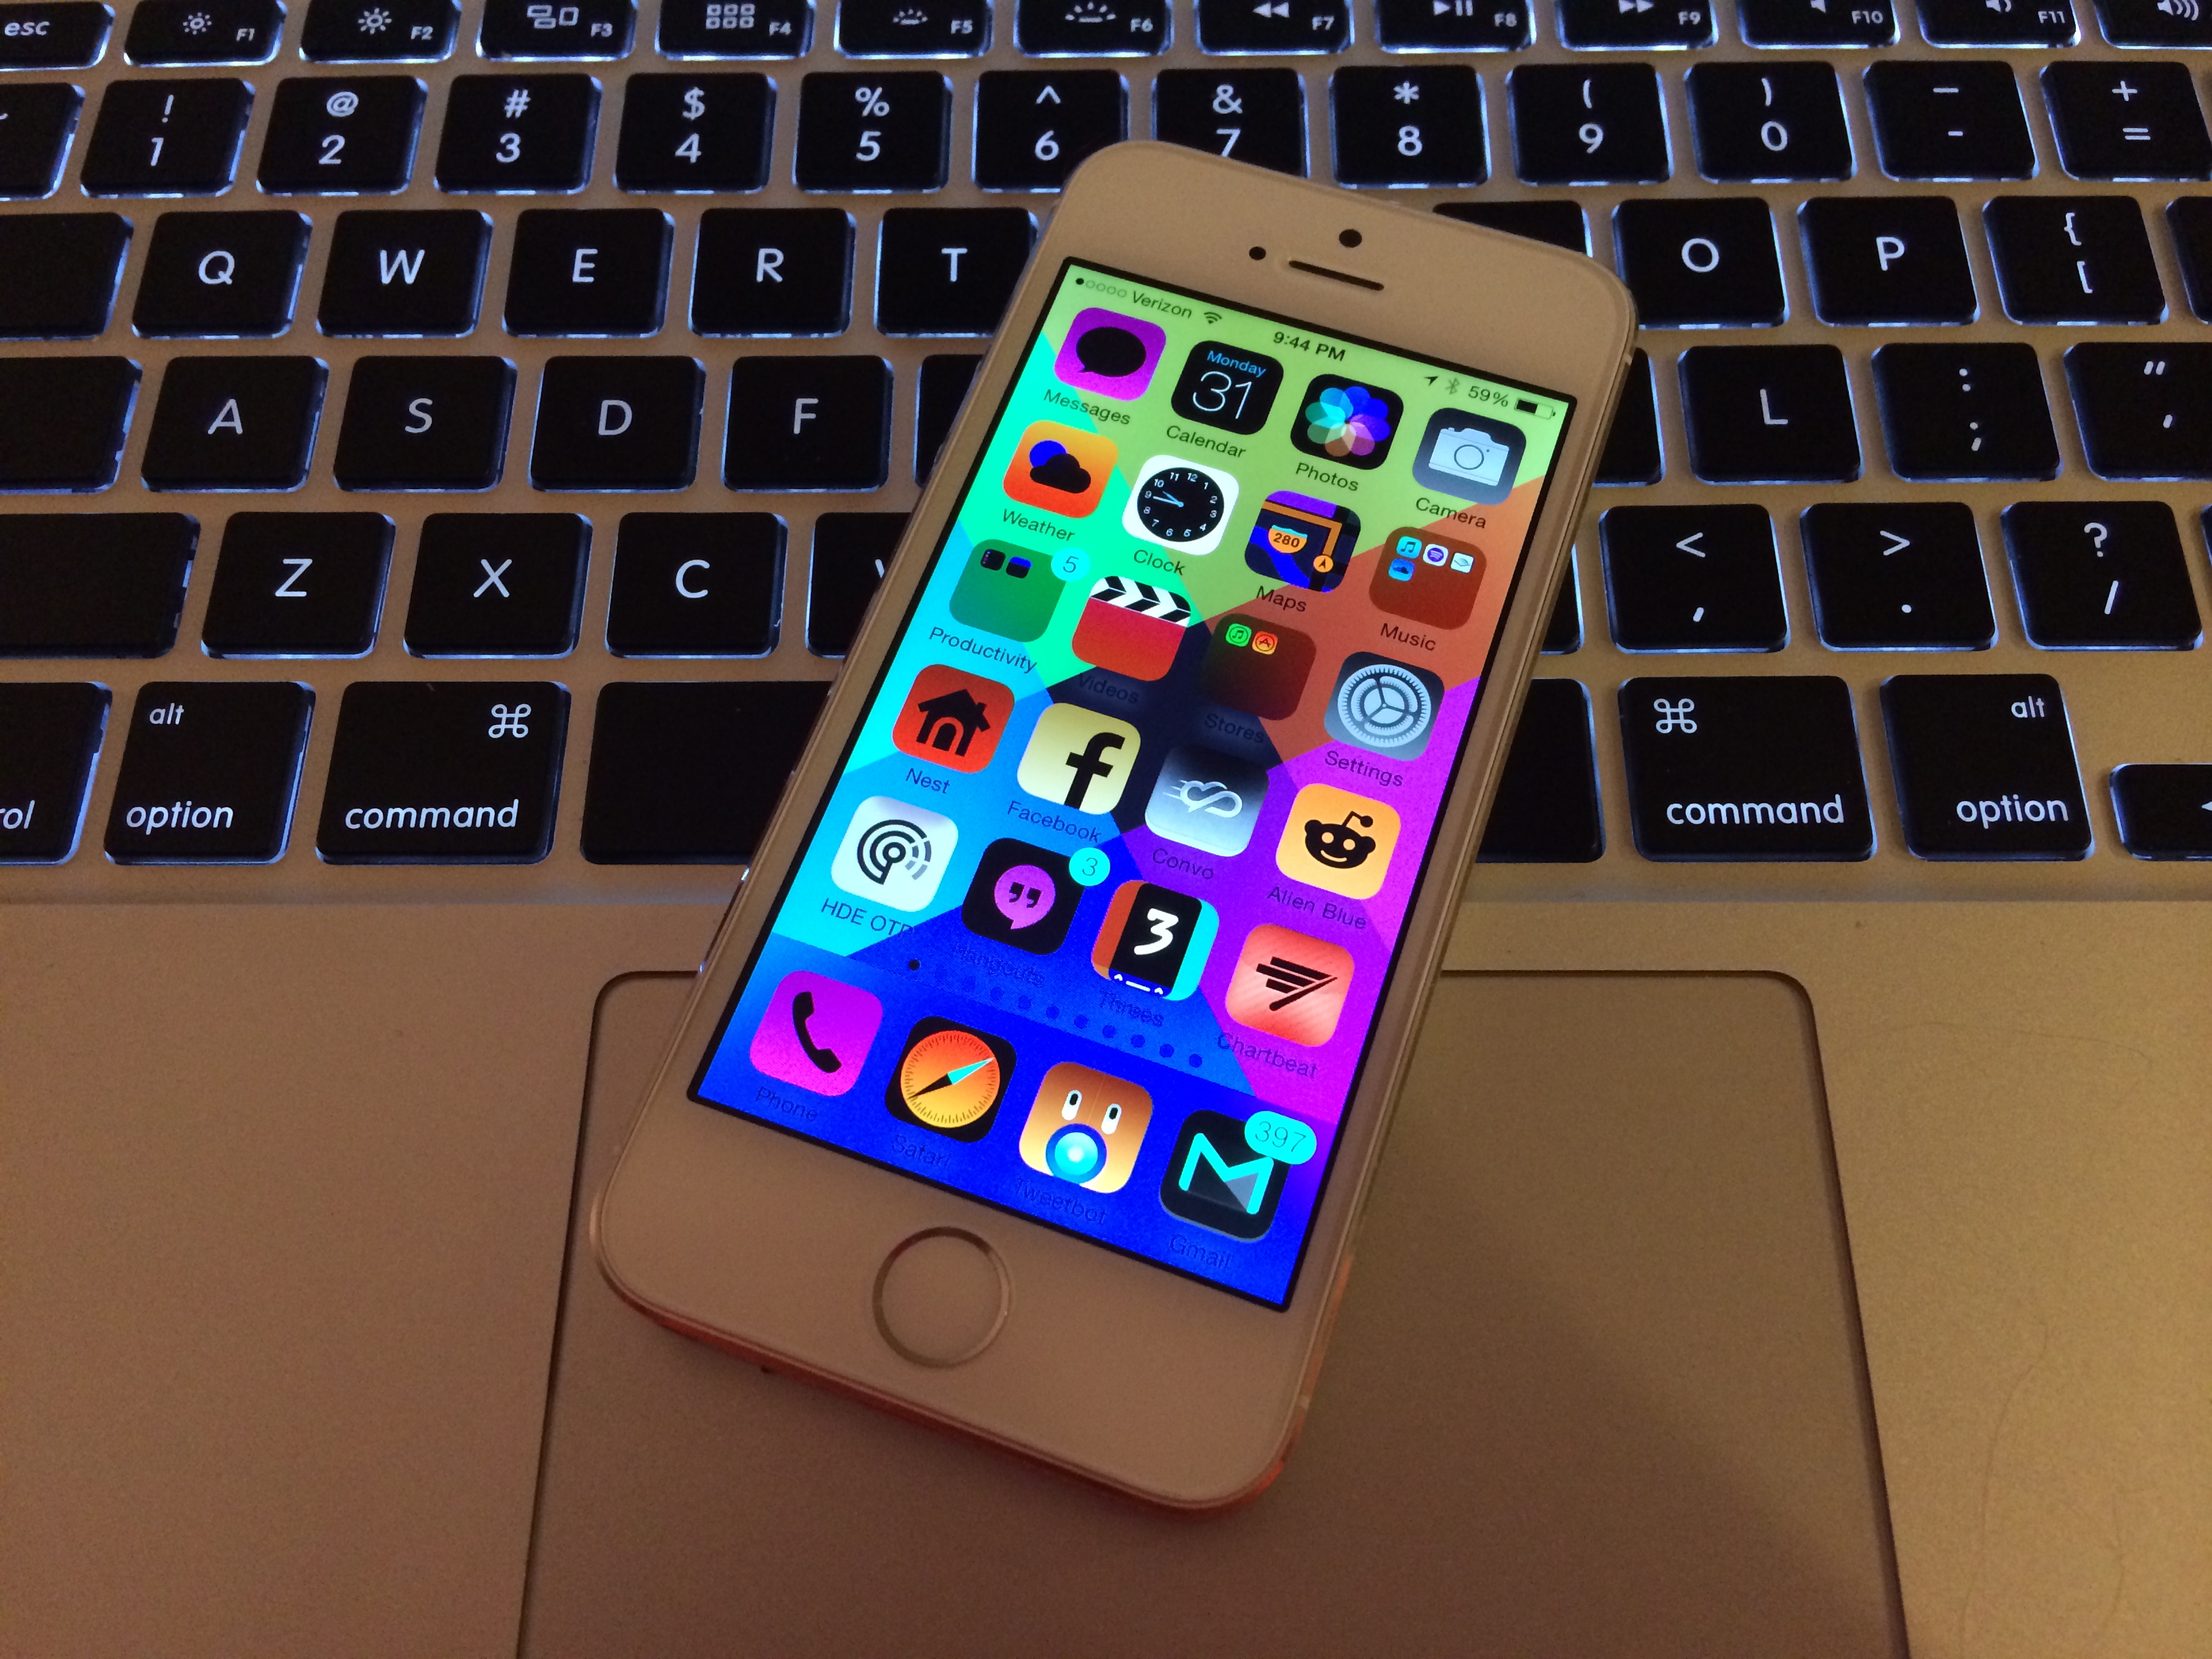 Invert colors for a broken iPhone prank.